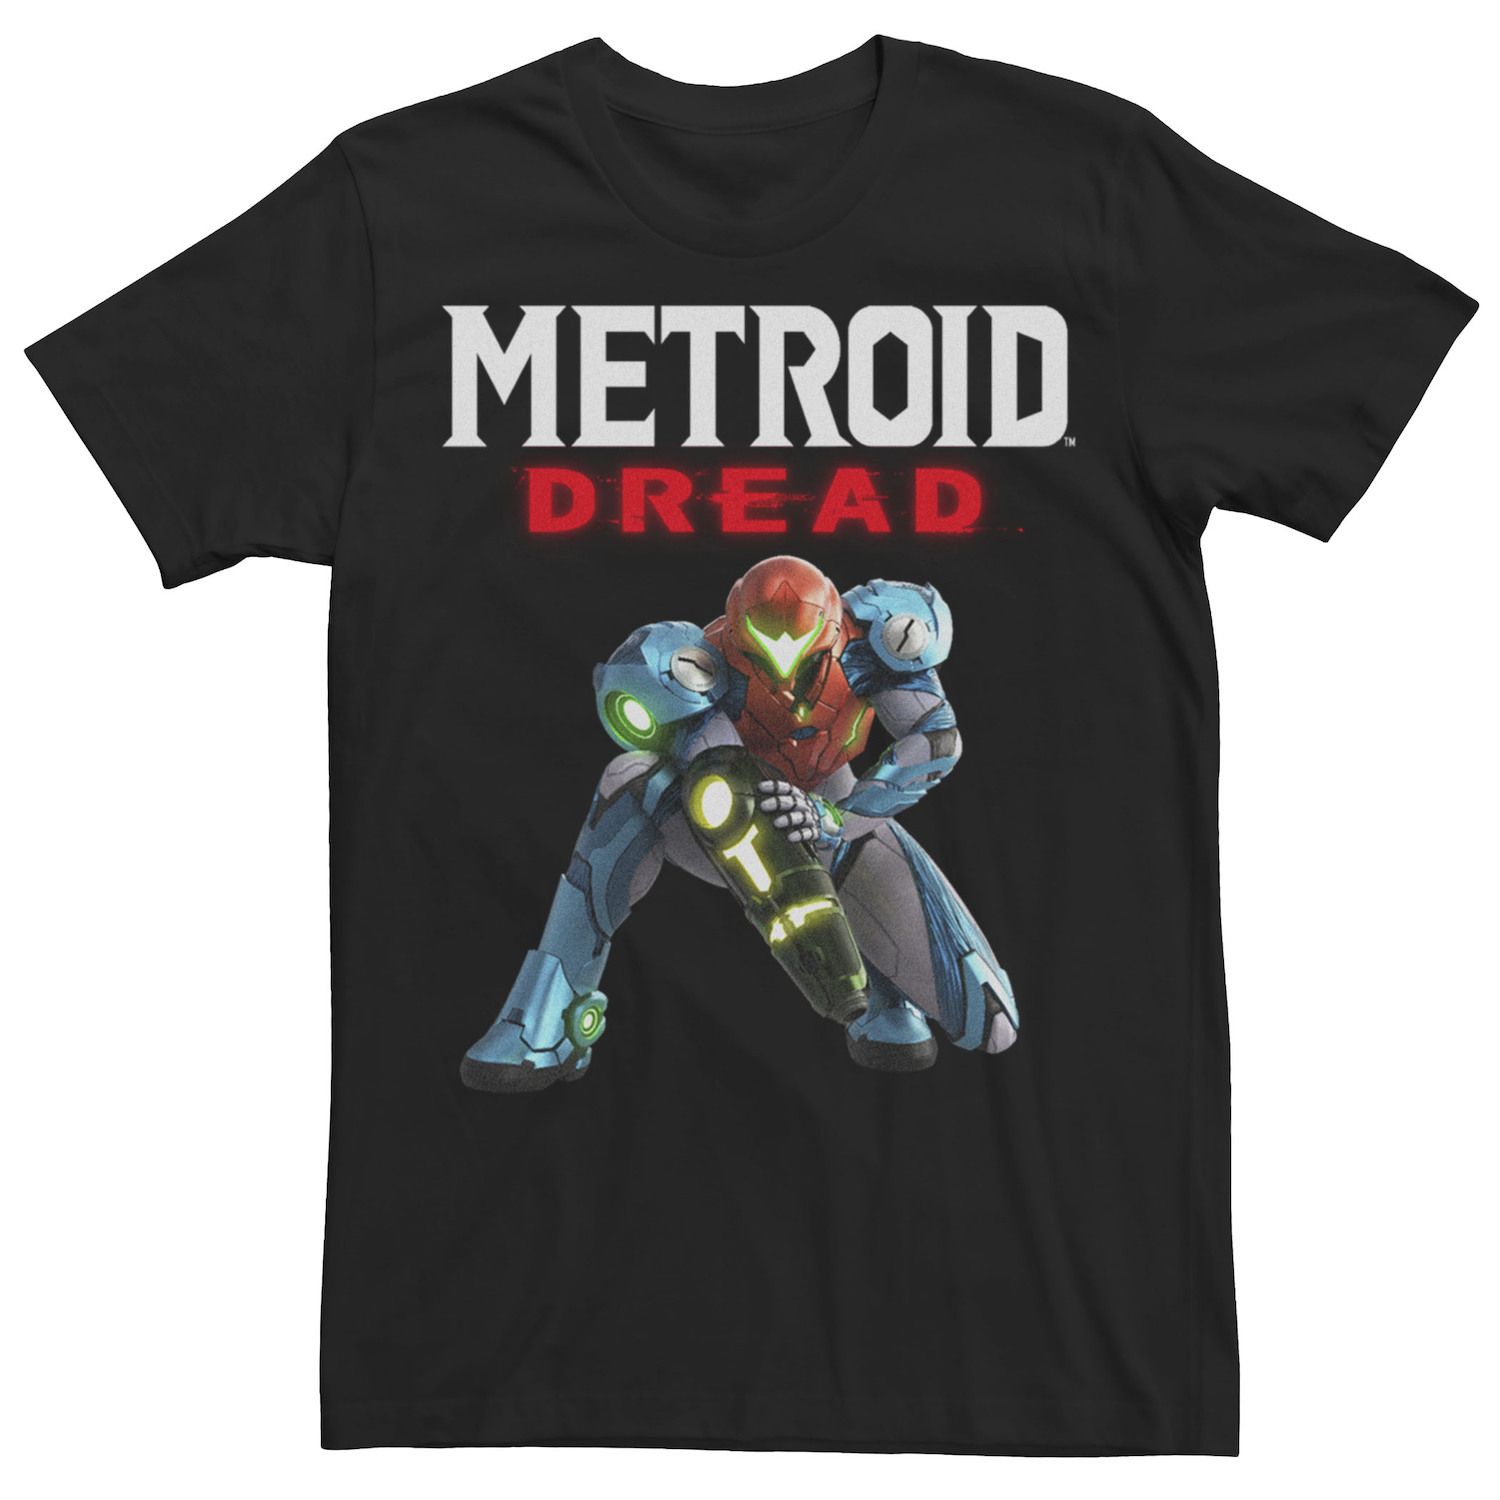 Мужская футболка с логотипом Metroid Prime Dread Samus Licensed Character swtich amiibo карта galaxy warrior связь sahms emmi metroid dread